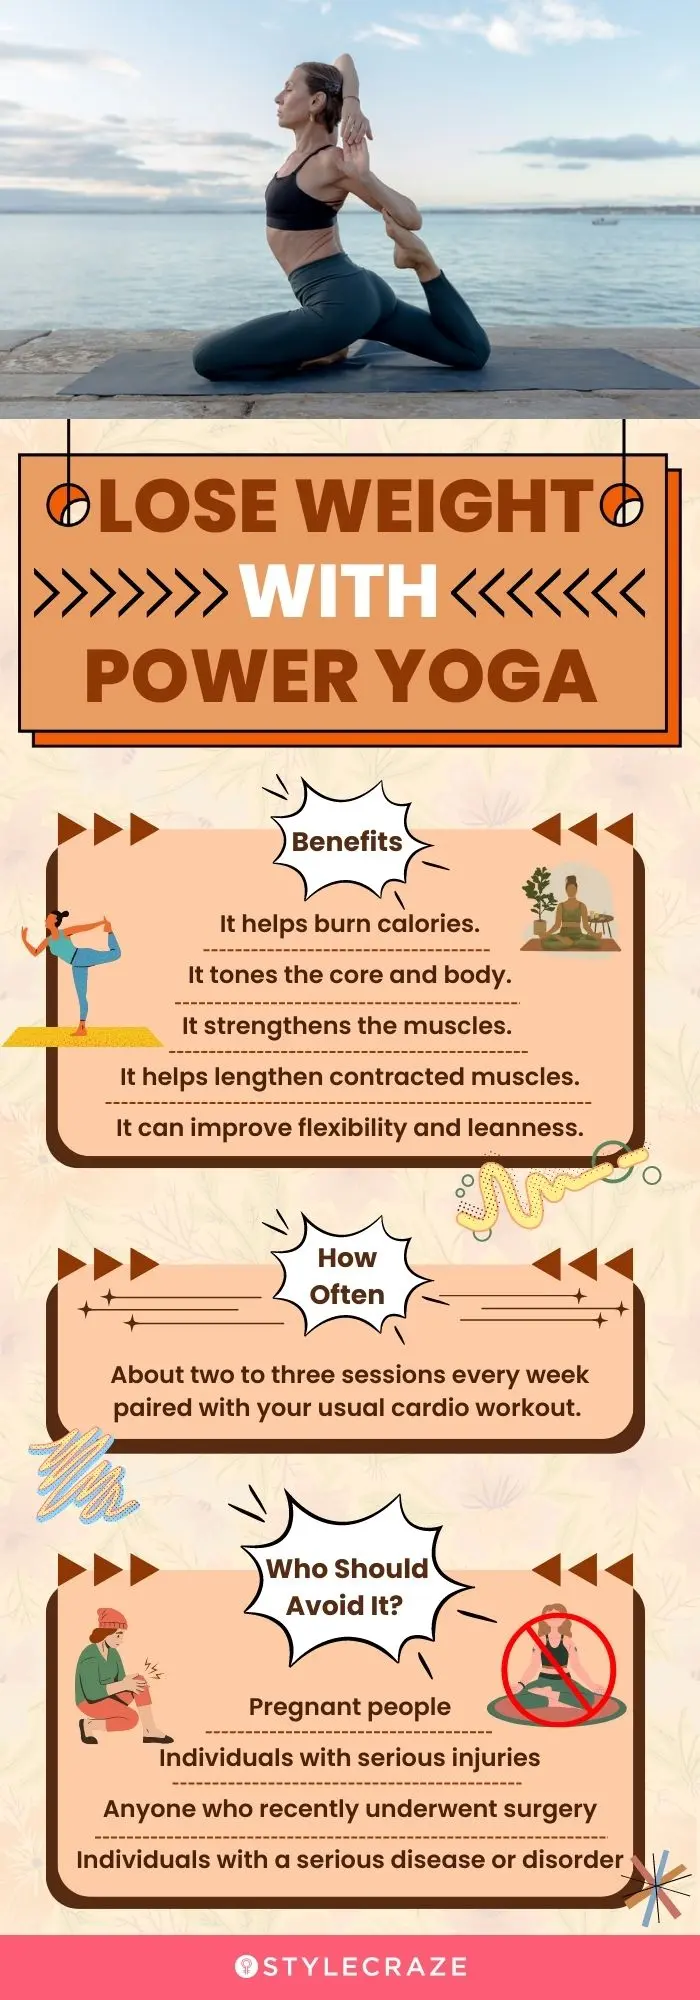 power yoga benefits - Does power yoga burn fat